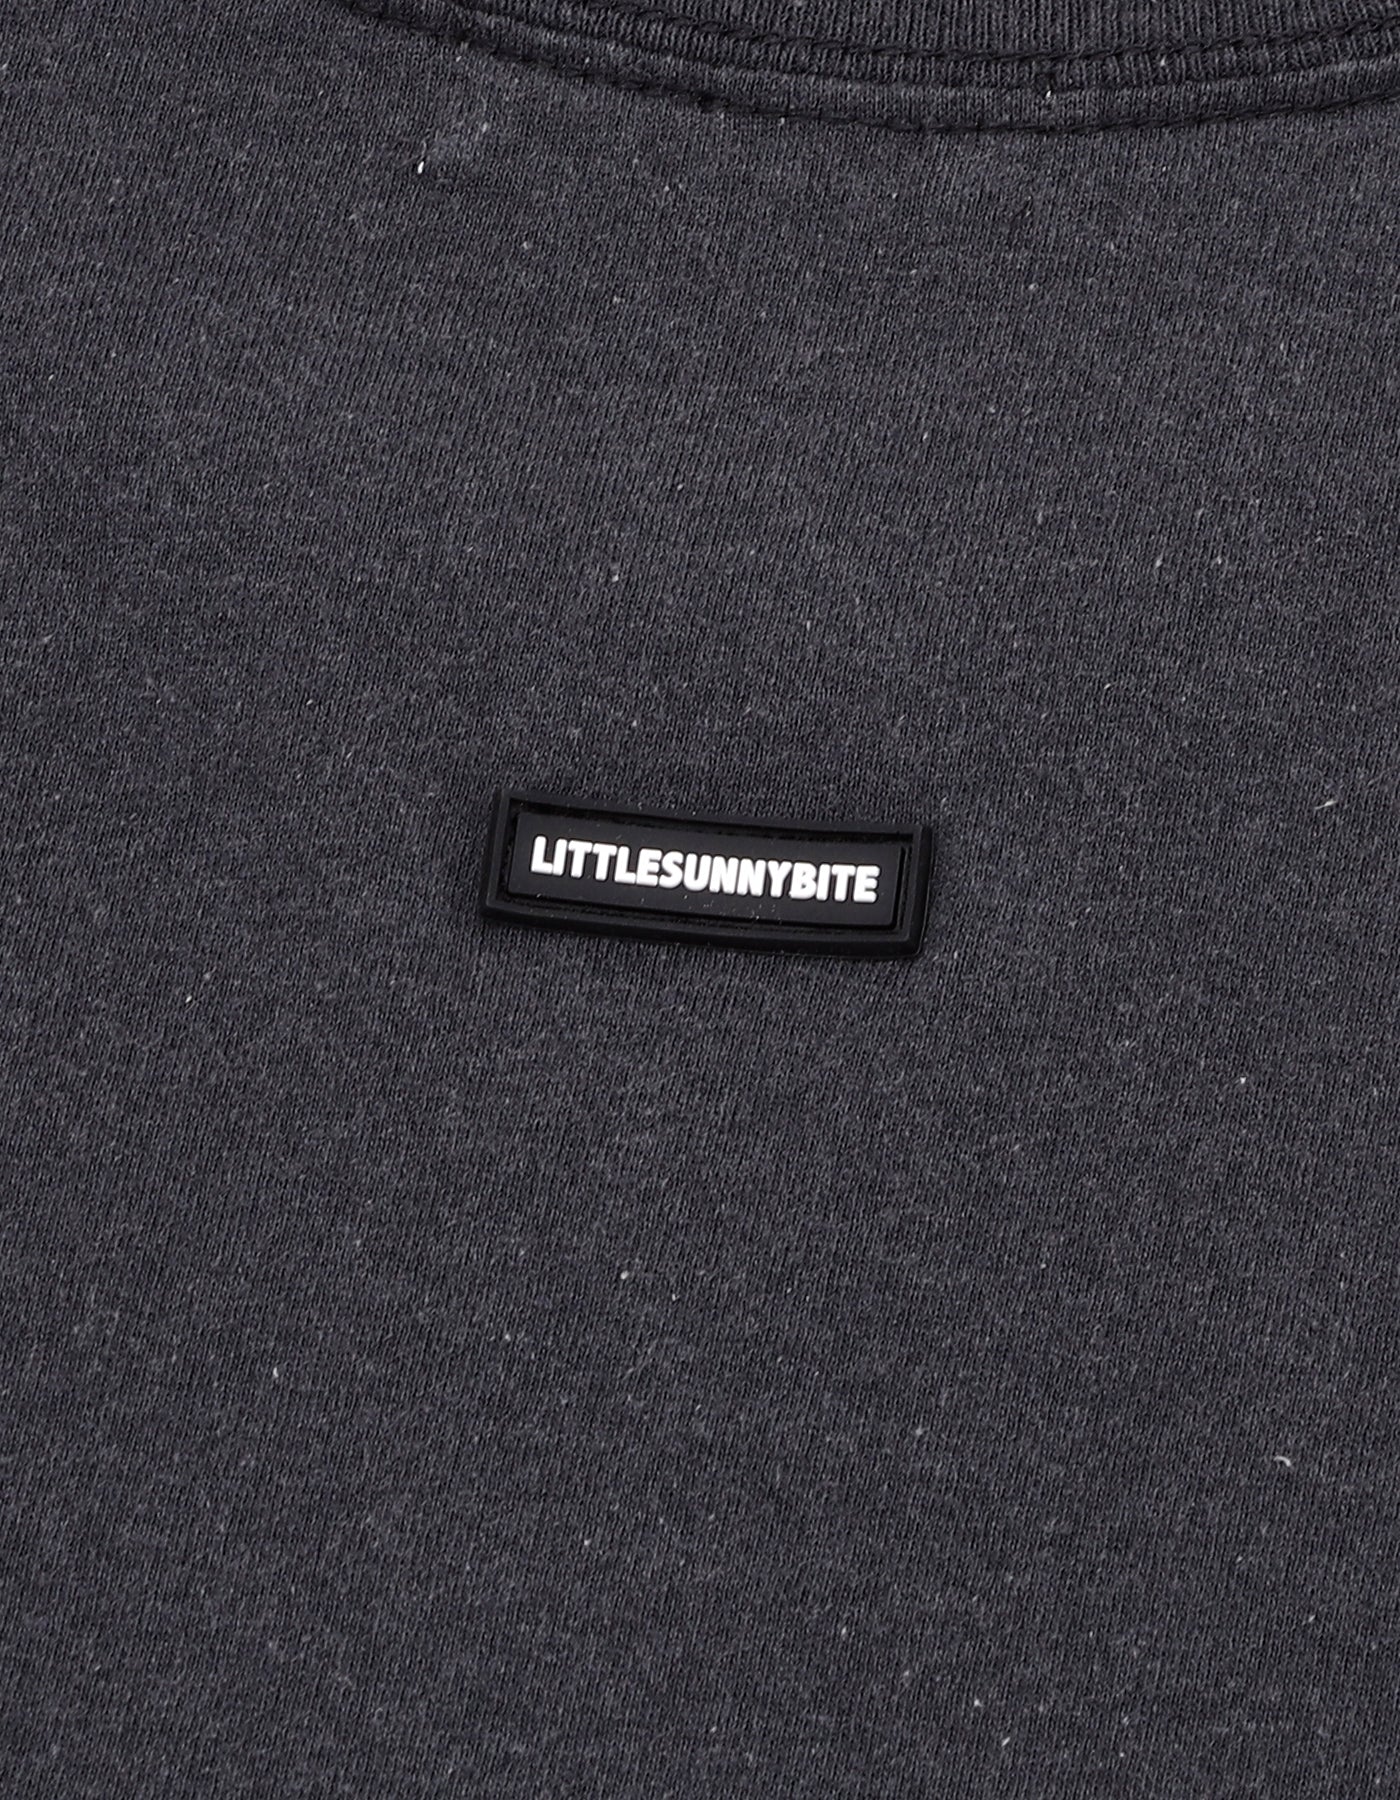 little sunny bite (リトルサニーバイト)Wing big t / BLACK – little